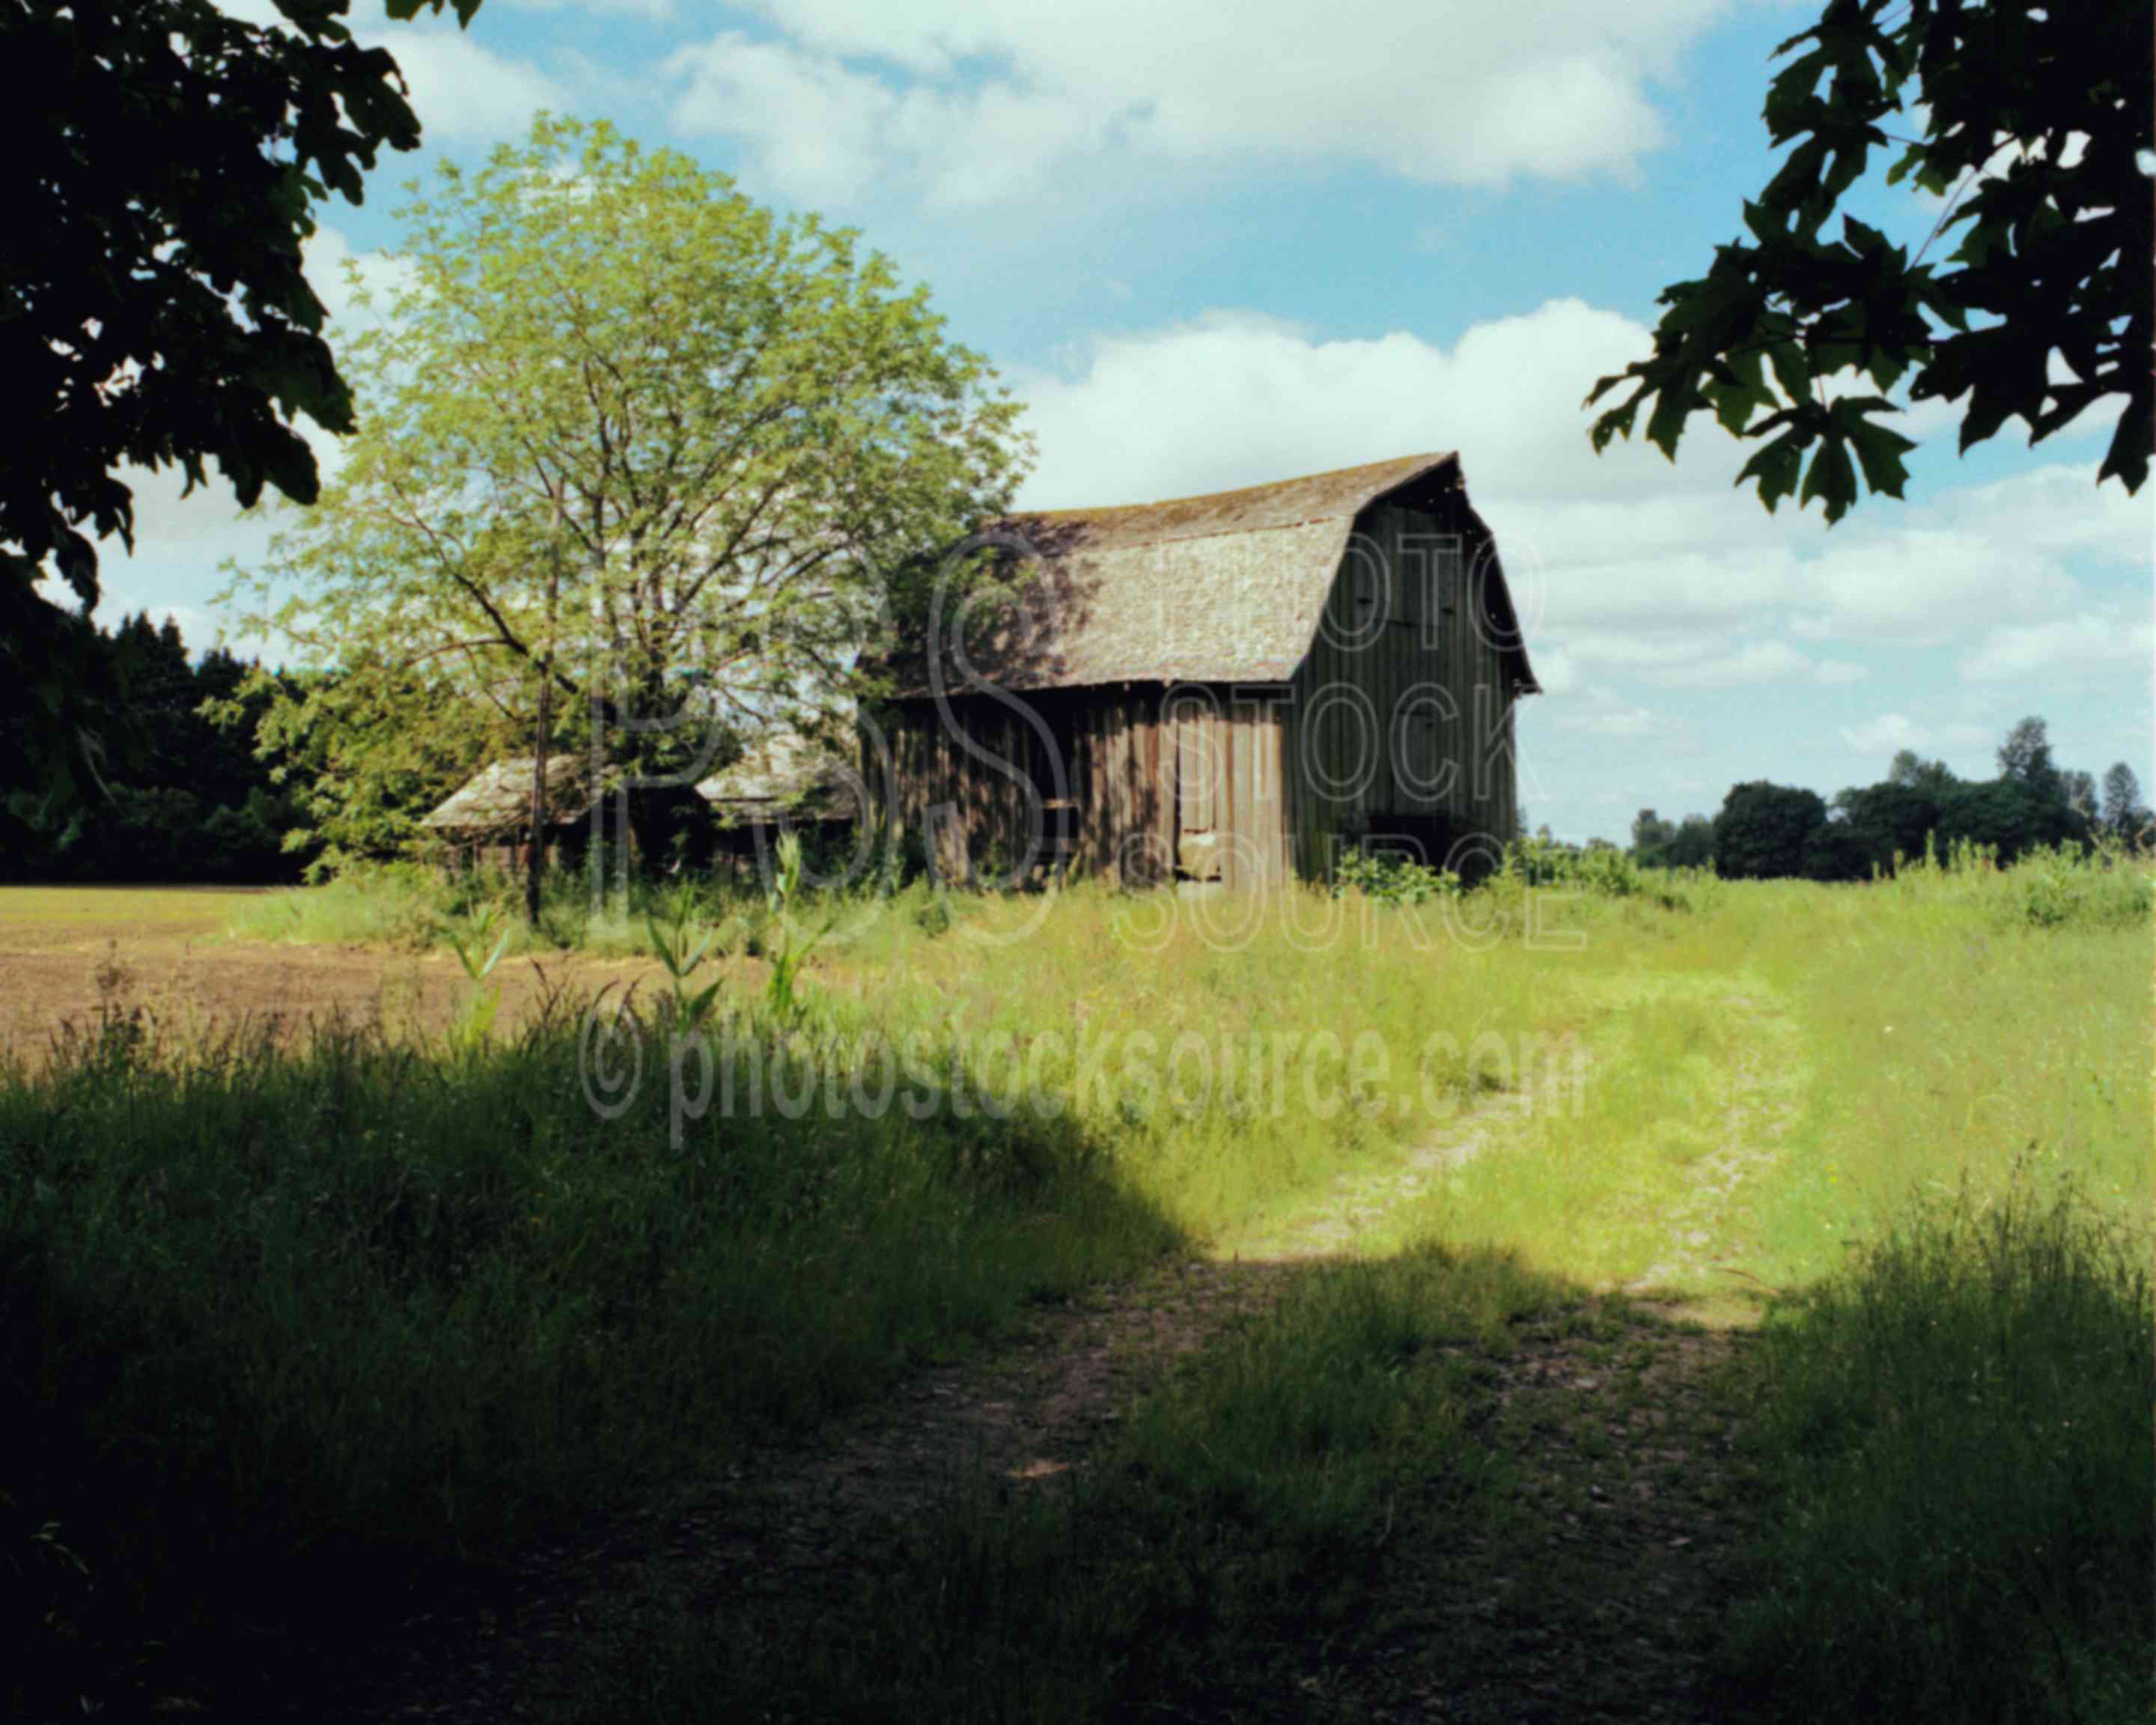 McKenzie Barn,barn,road,tree,usas,barns